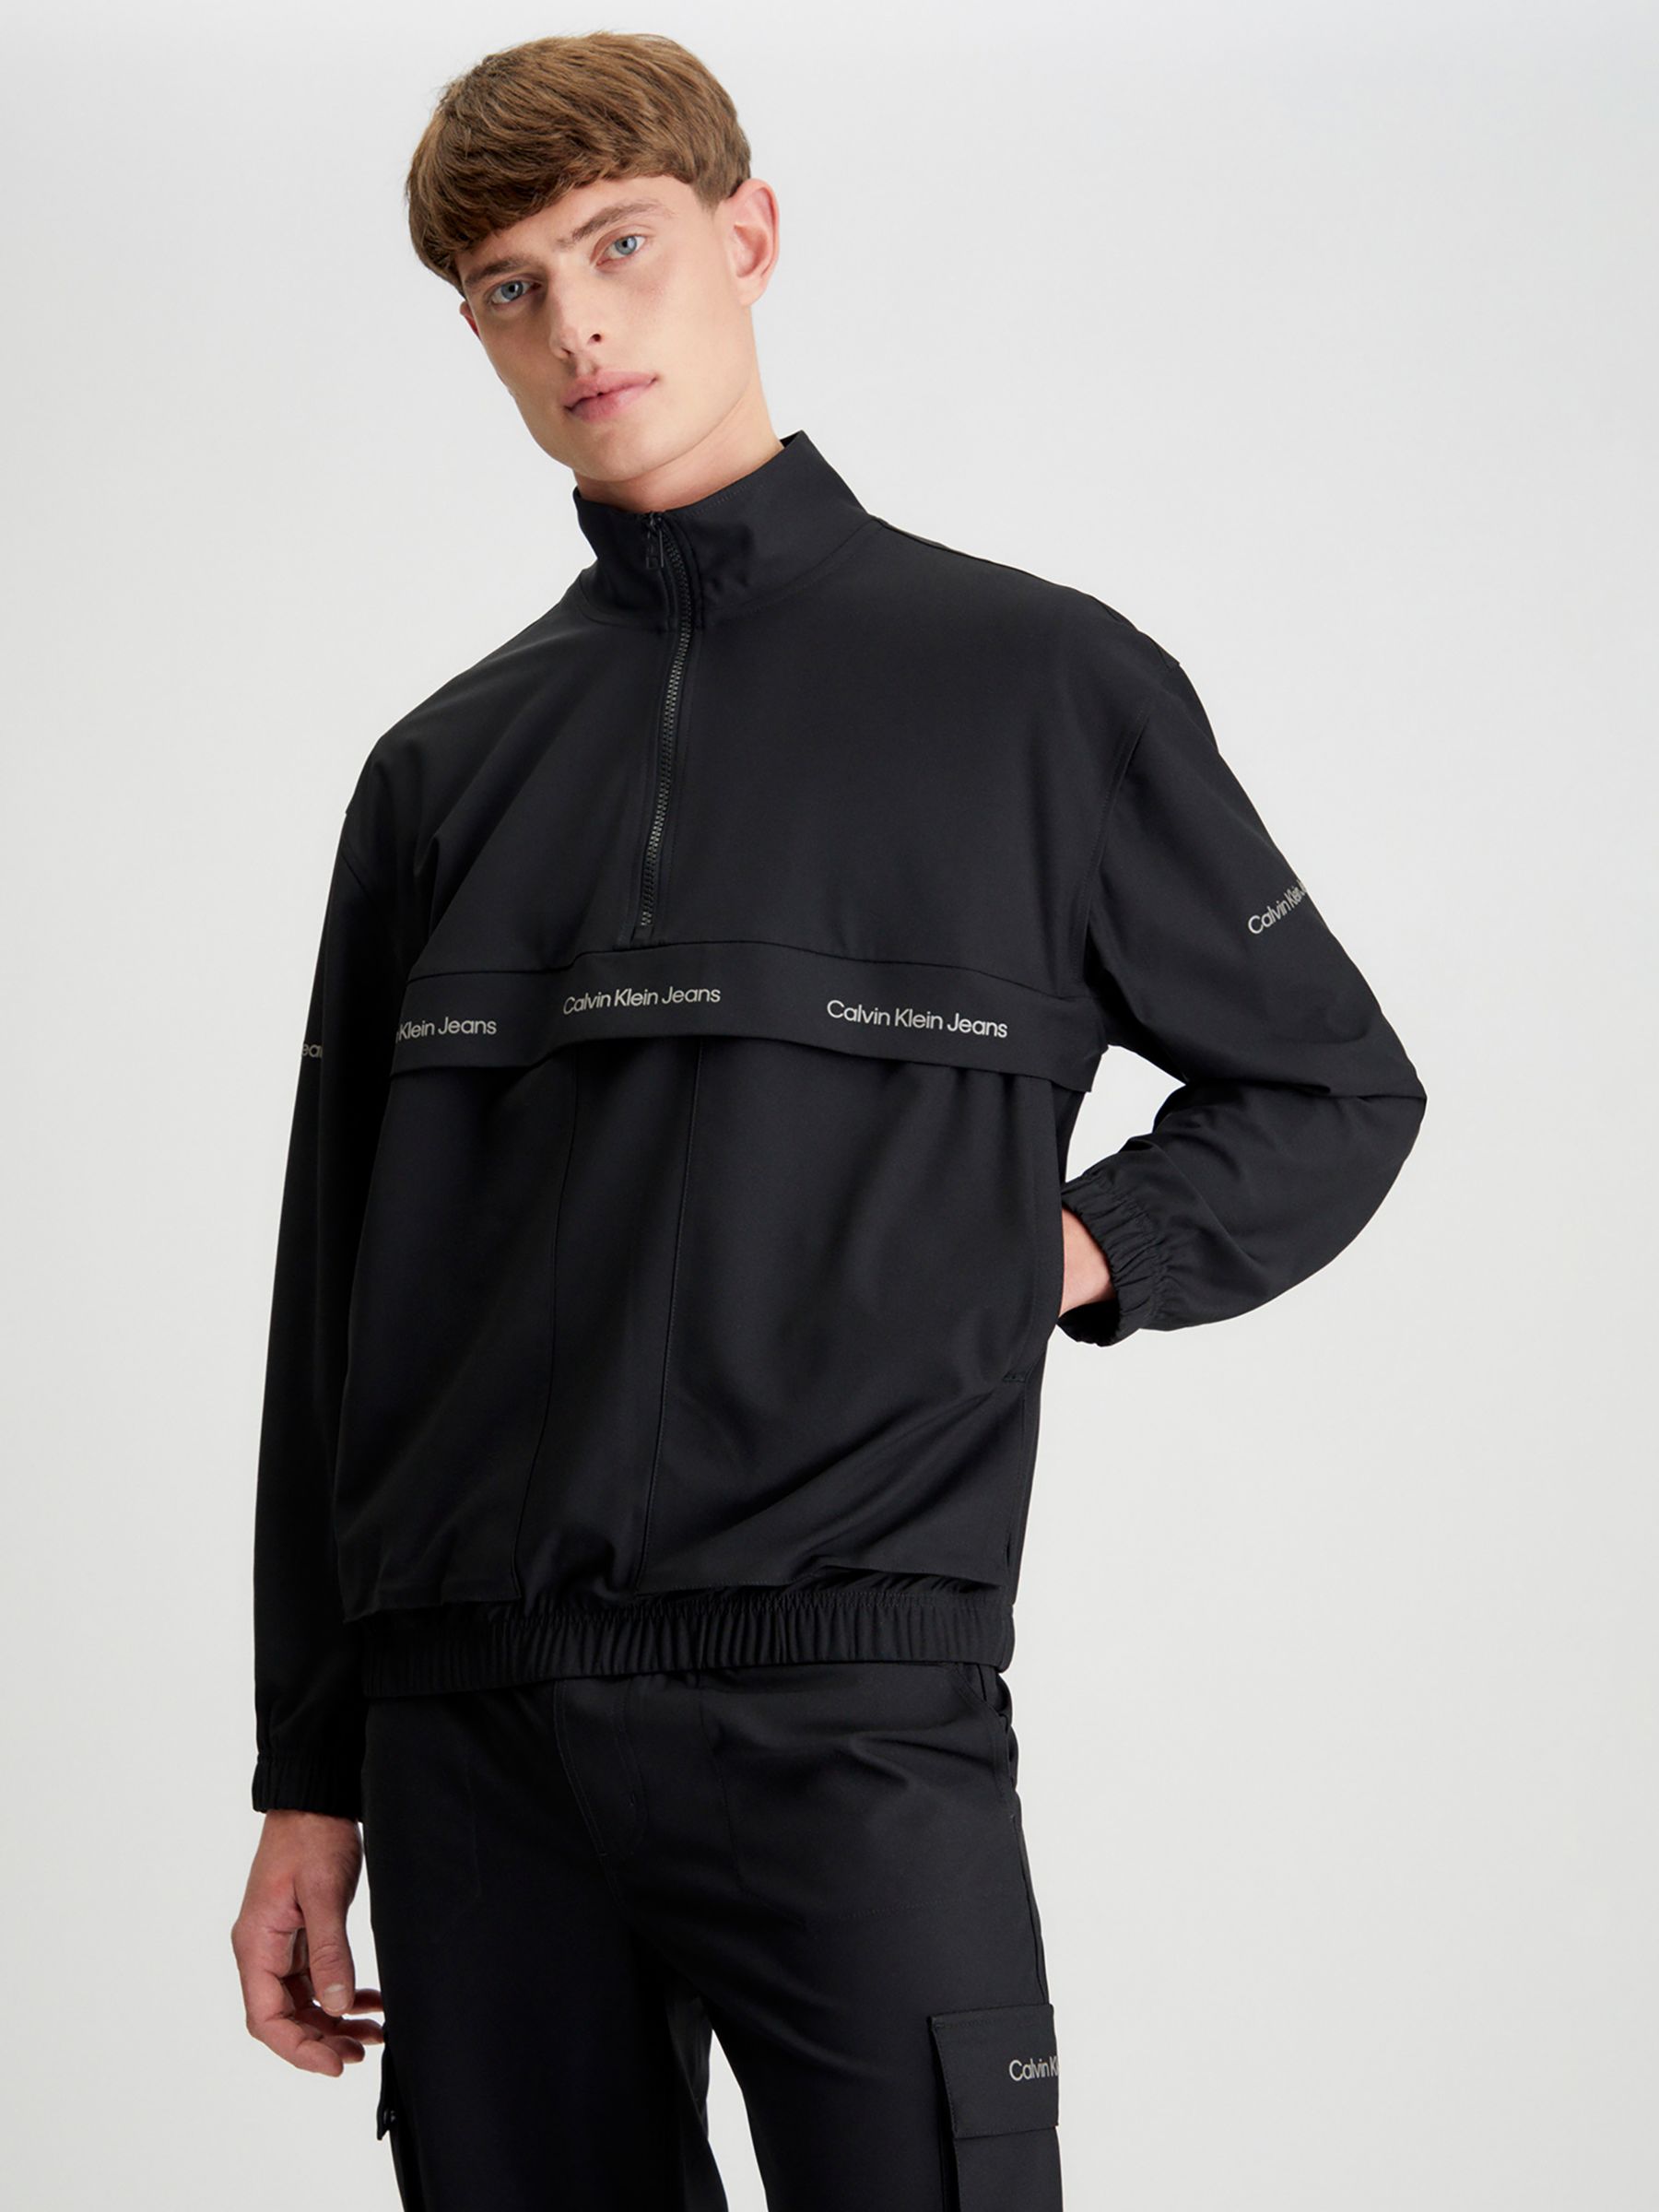 Calvin Klein Calvin Klein Jeans Technical Repeat Logo Zip Jacket, Black, L